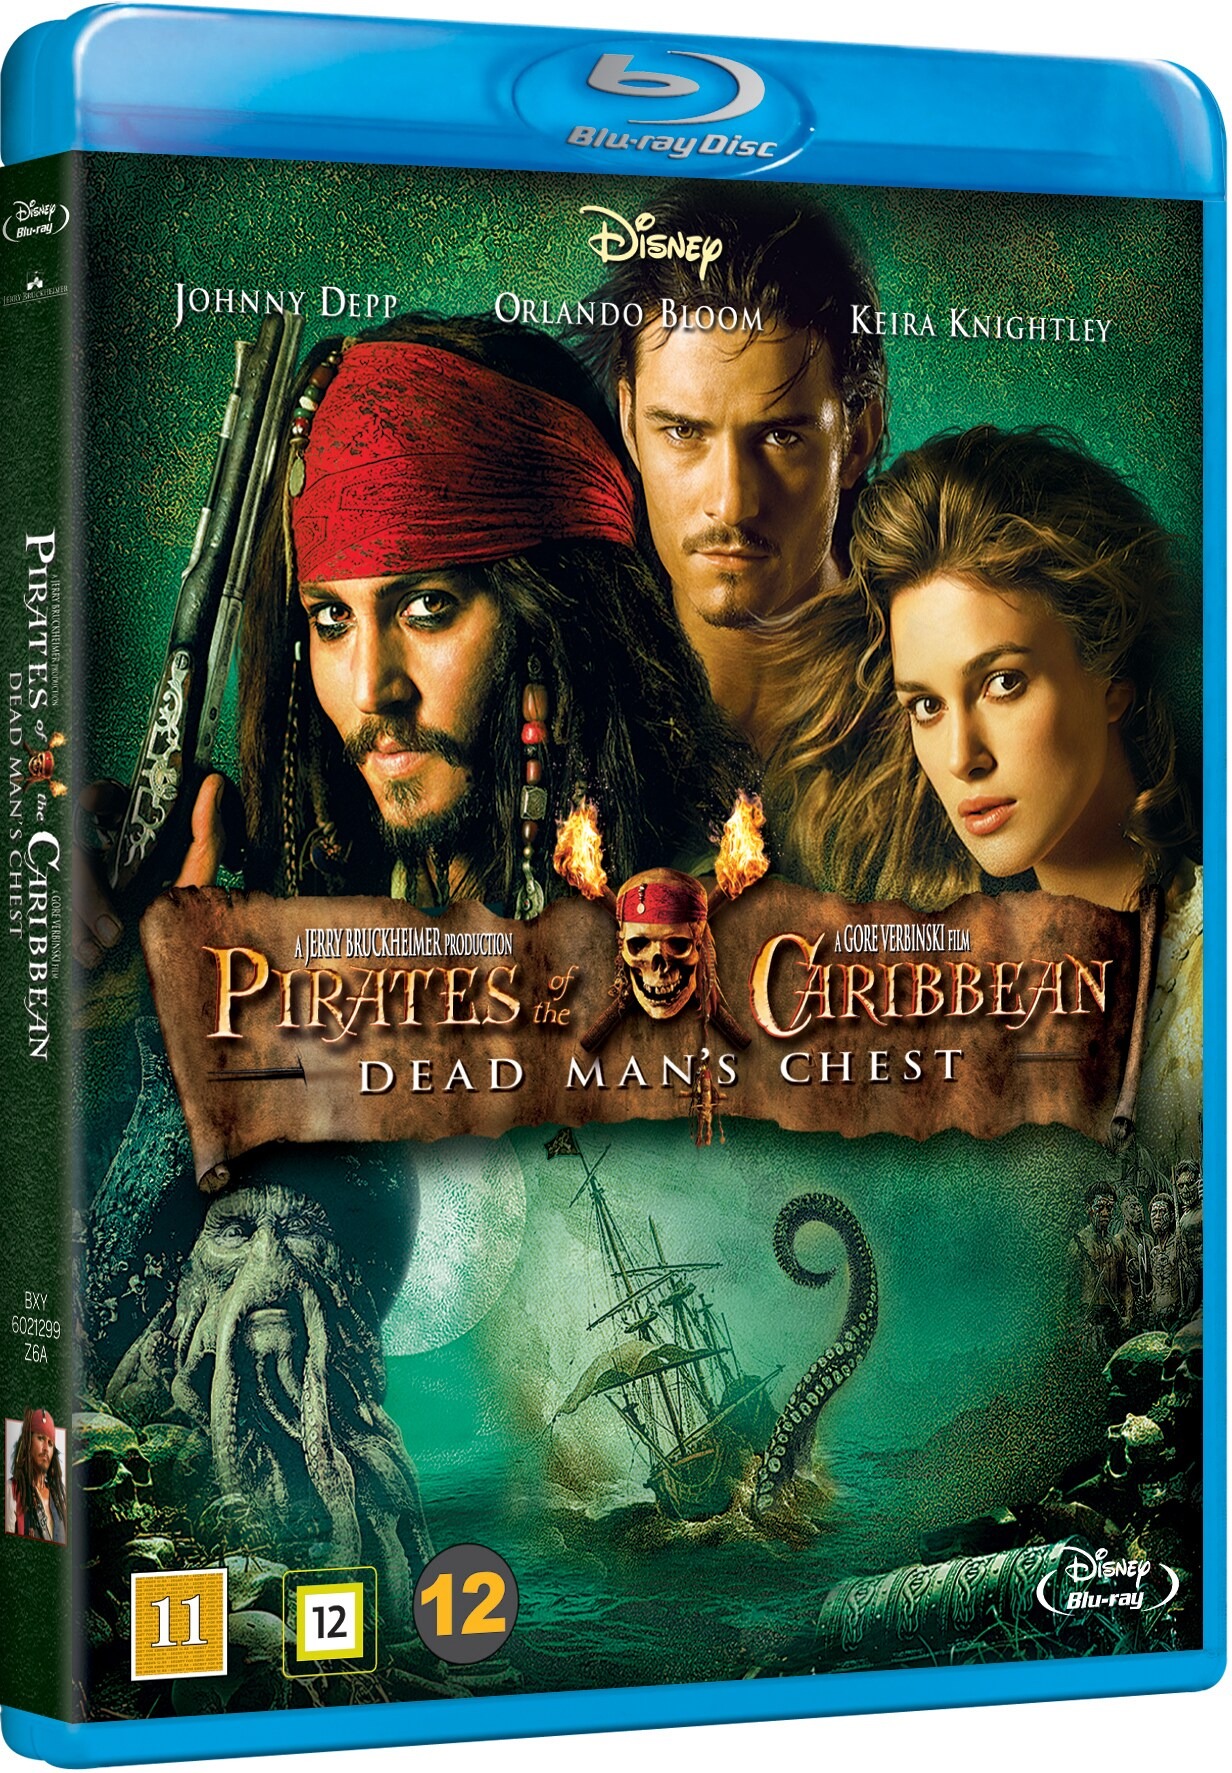 Pirates of the Caribbean - Död mans kista (Blu-Ray) beg